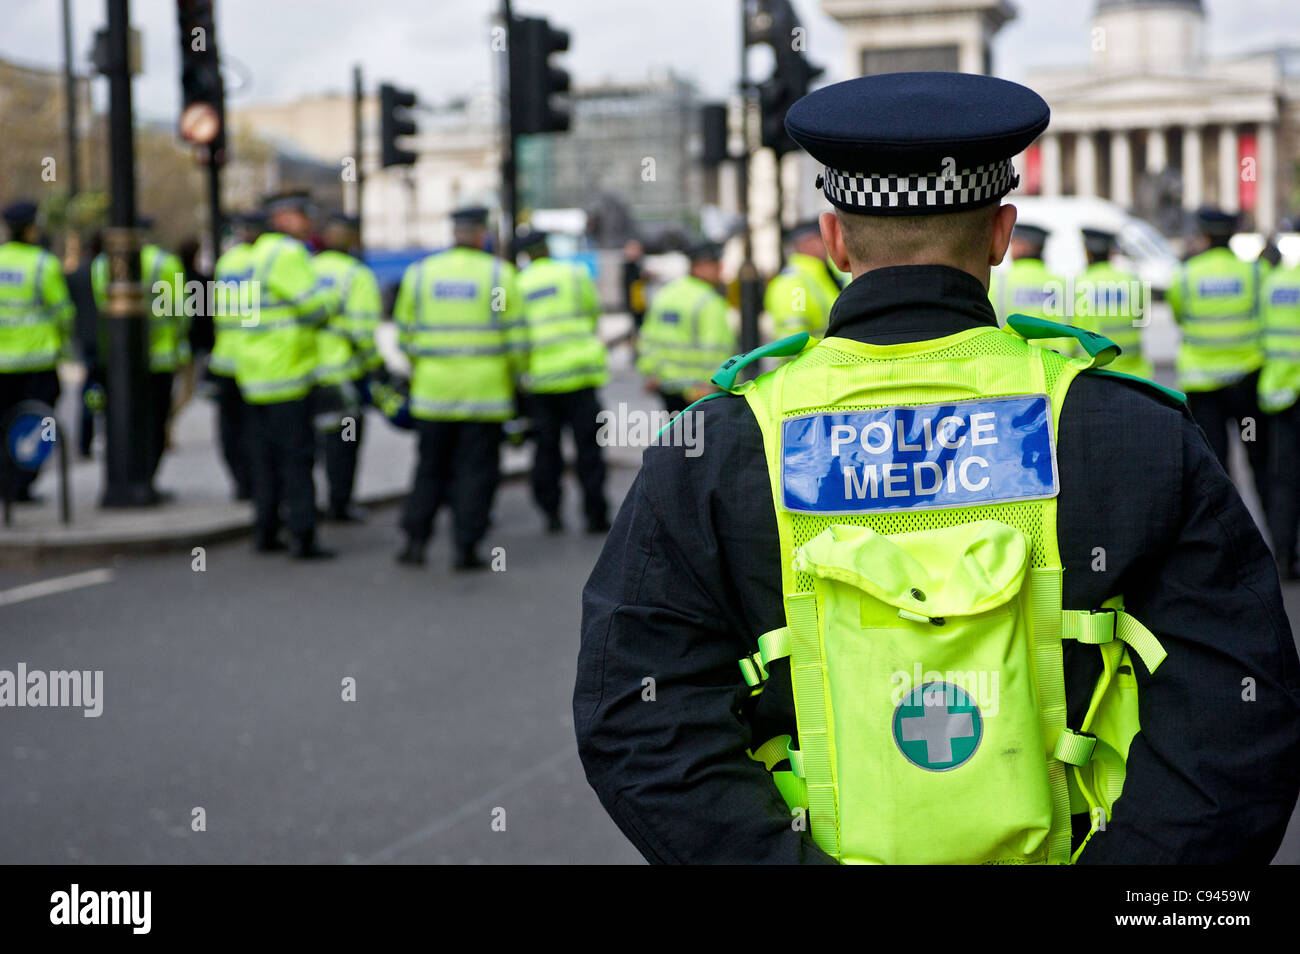 A Metropolitan Police Medic on duty in London Stock Photo